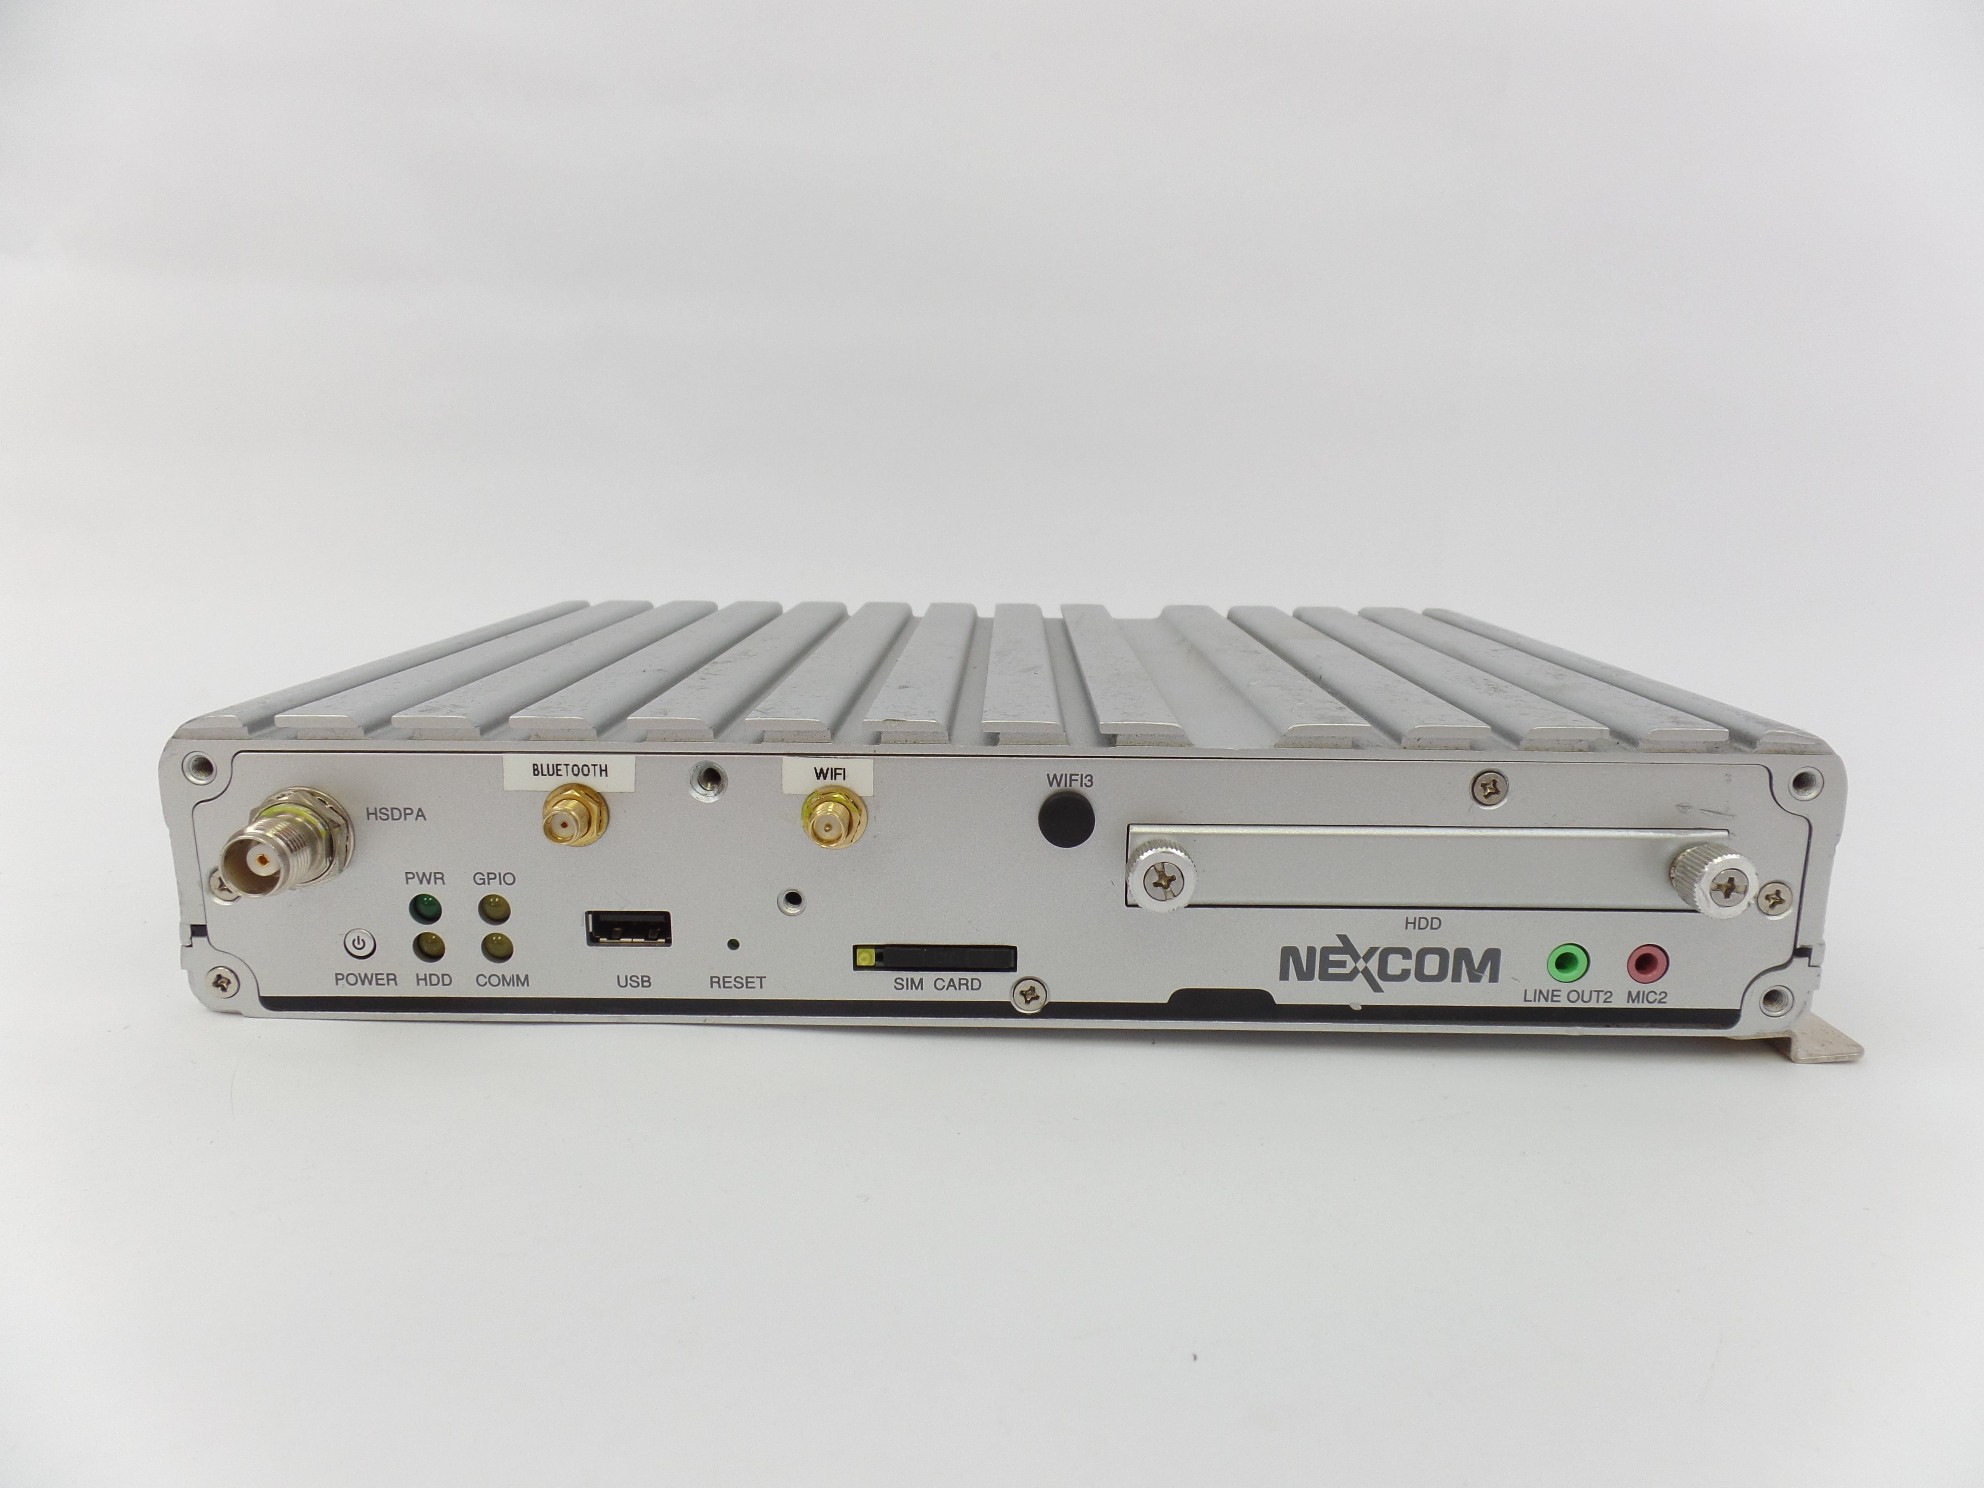 Read: Untested Nexcom VTC6110 16GB In-Vehicle Computer VTC6110-ATT